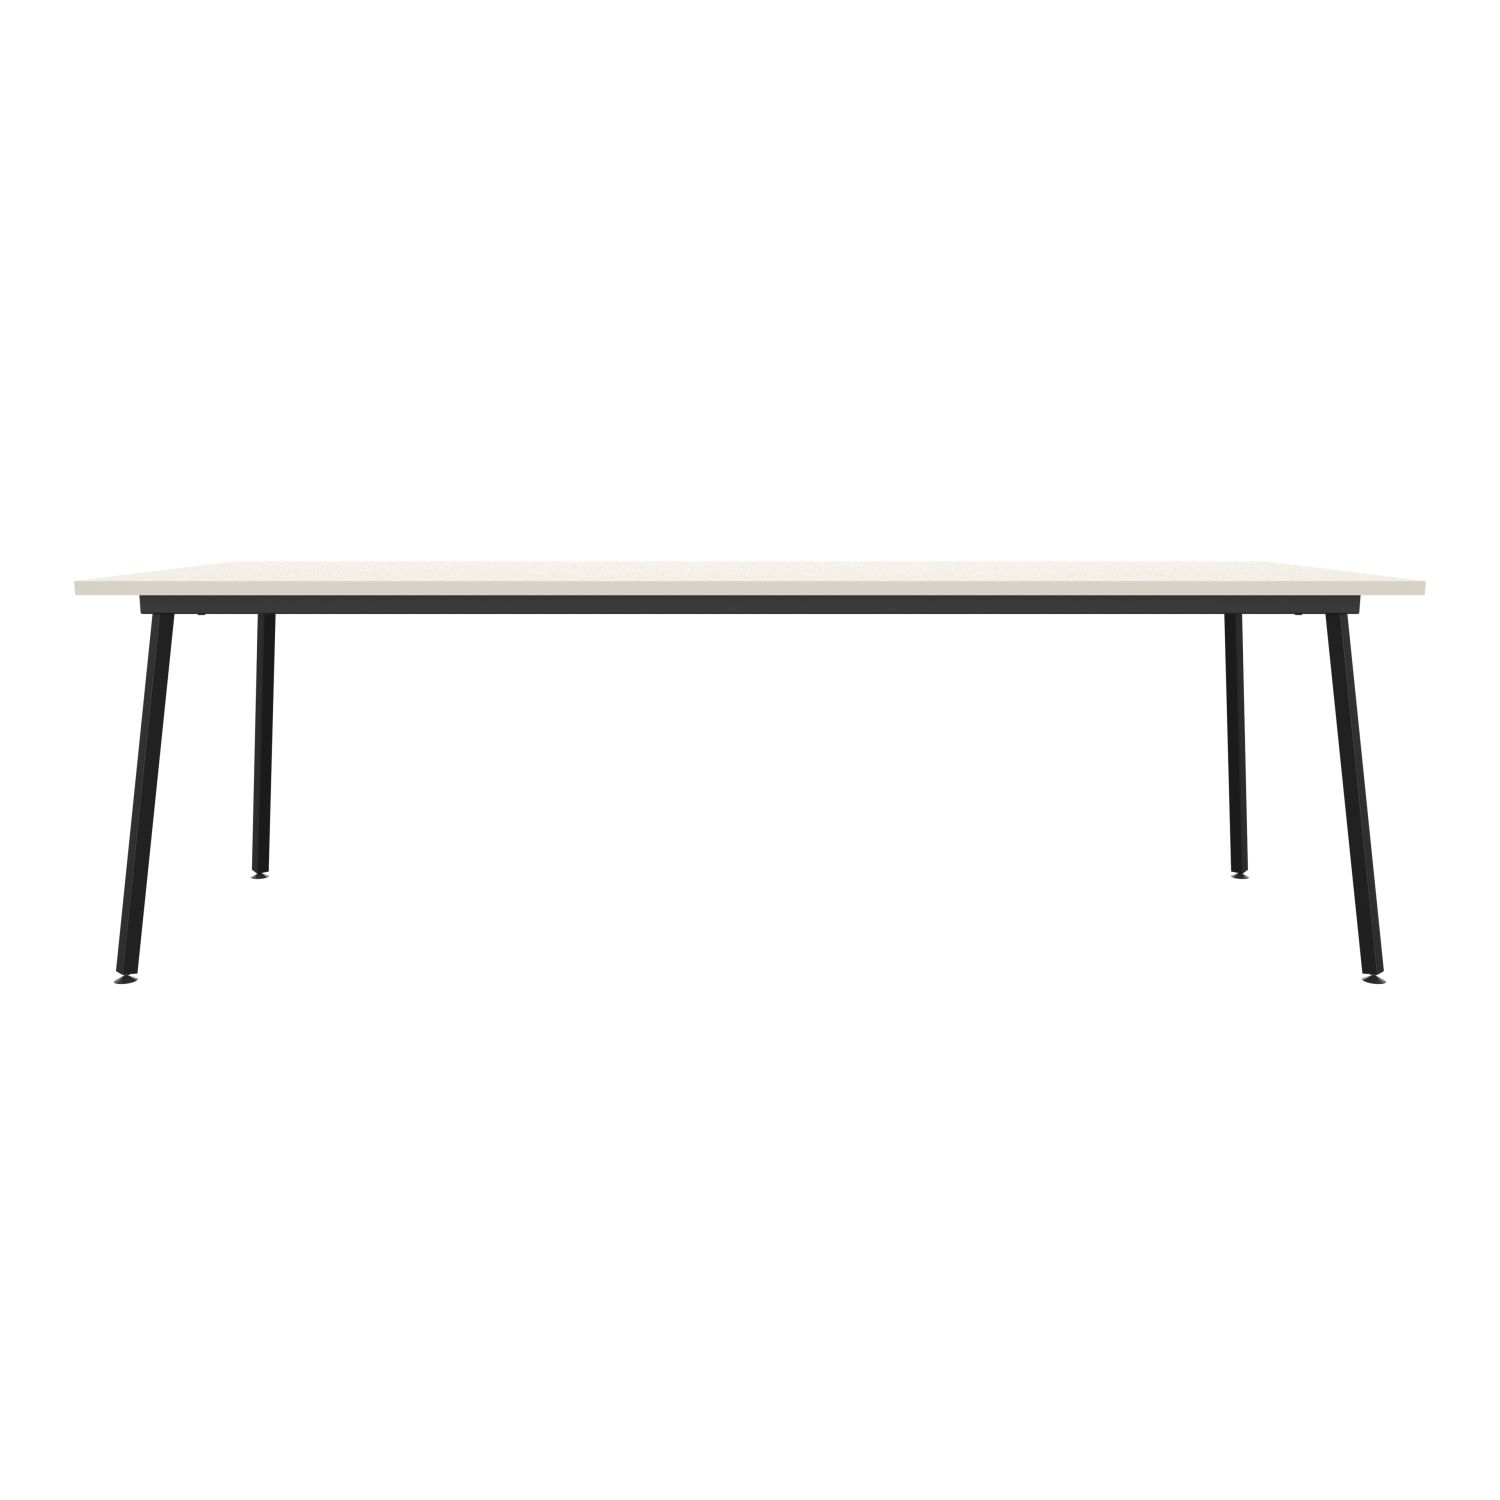 lensvelt maarten baas table fixed height 80x200 table top 26 mm top melamine white edge abs white black frame ral9005